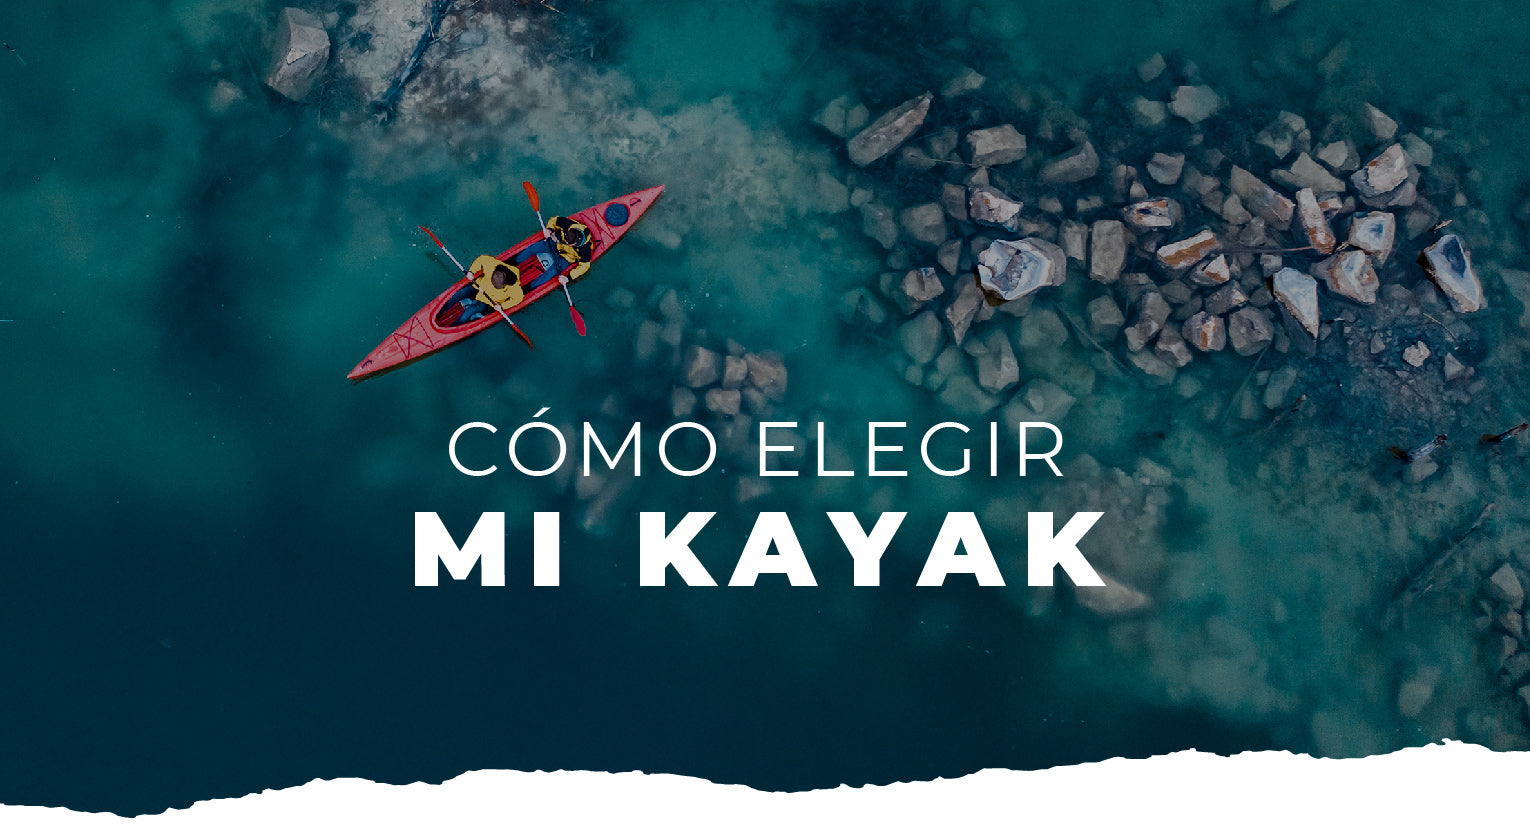 Consejos para la pesca con kayak - Blog de Kayaking